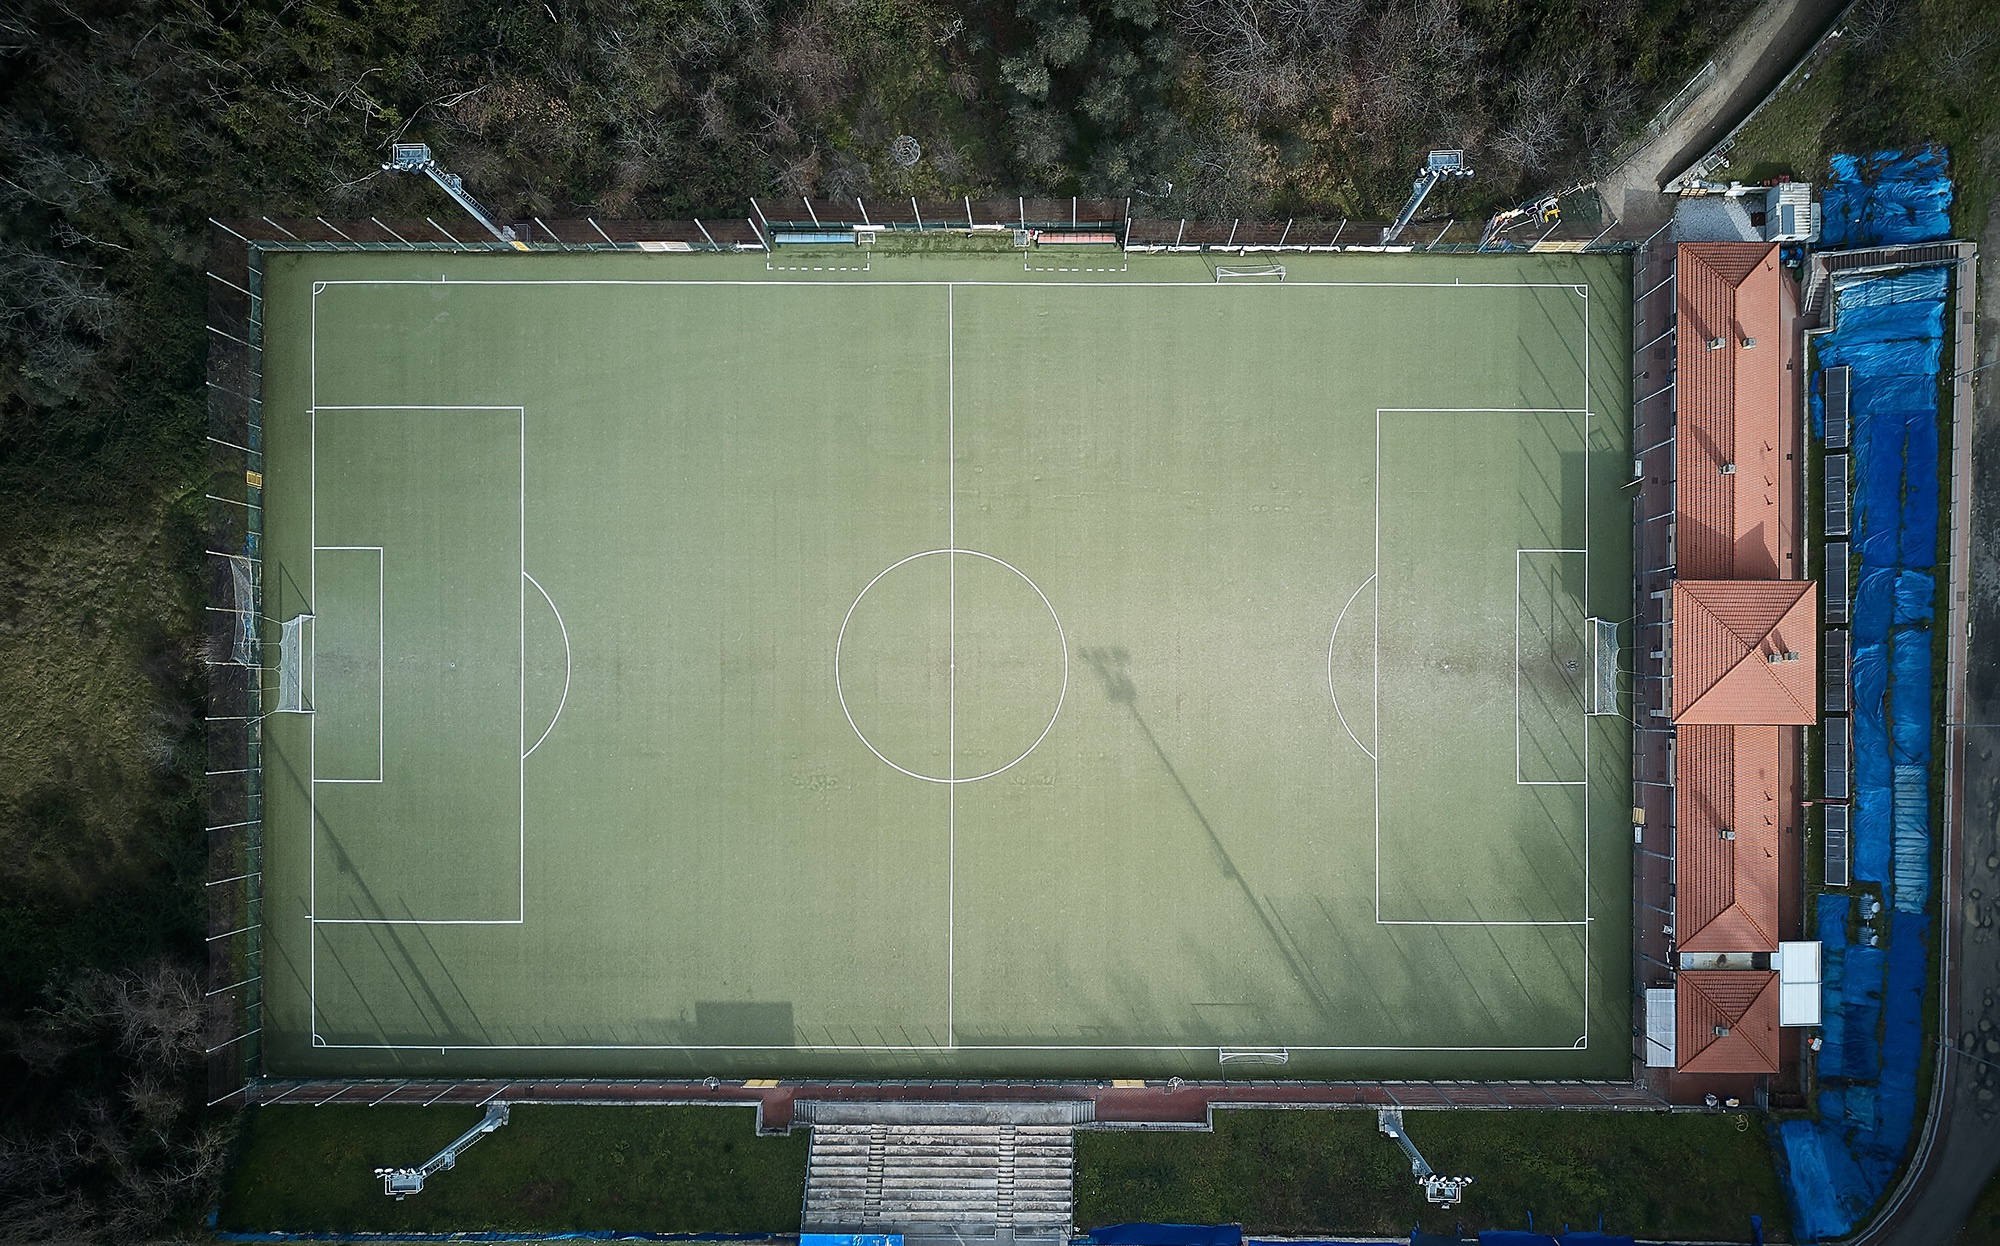 General 2000x1246 soccer field aerial view soccer sport